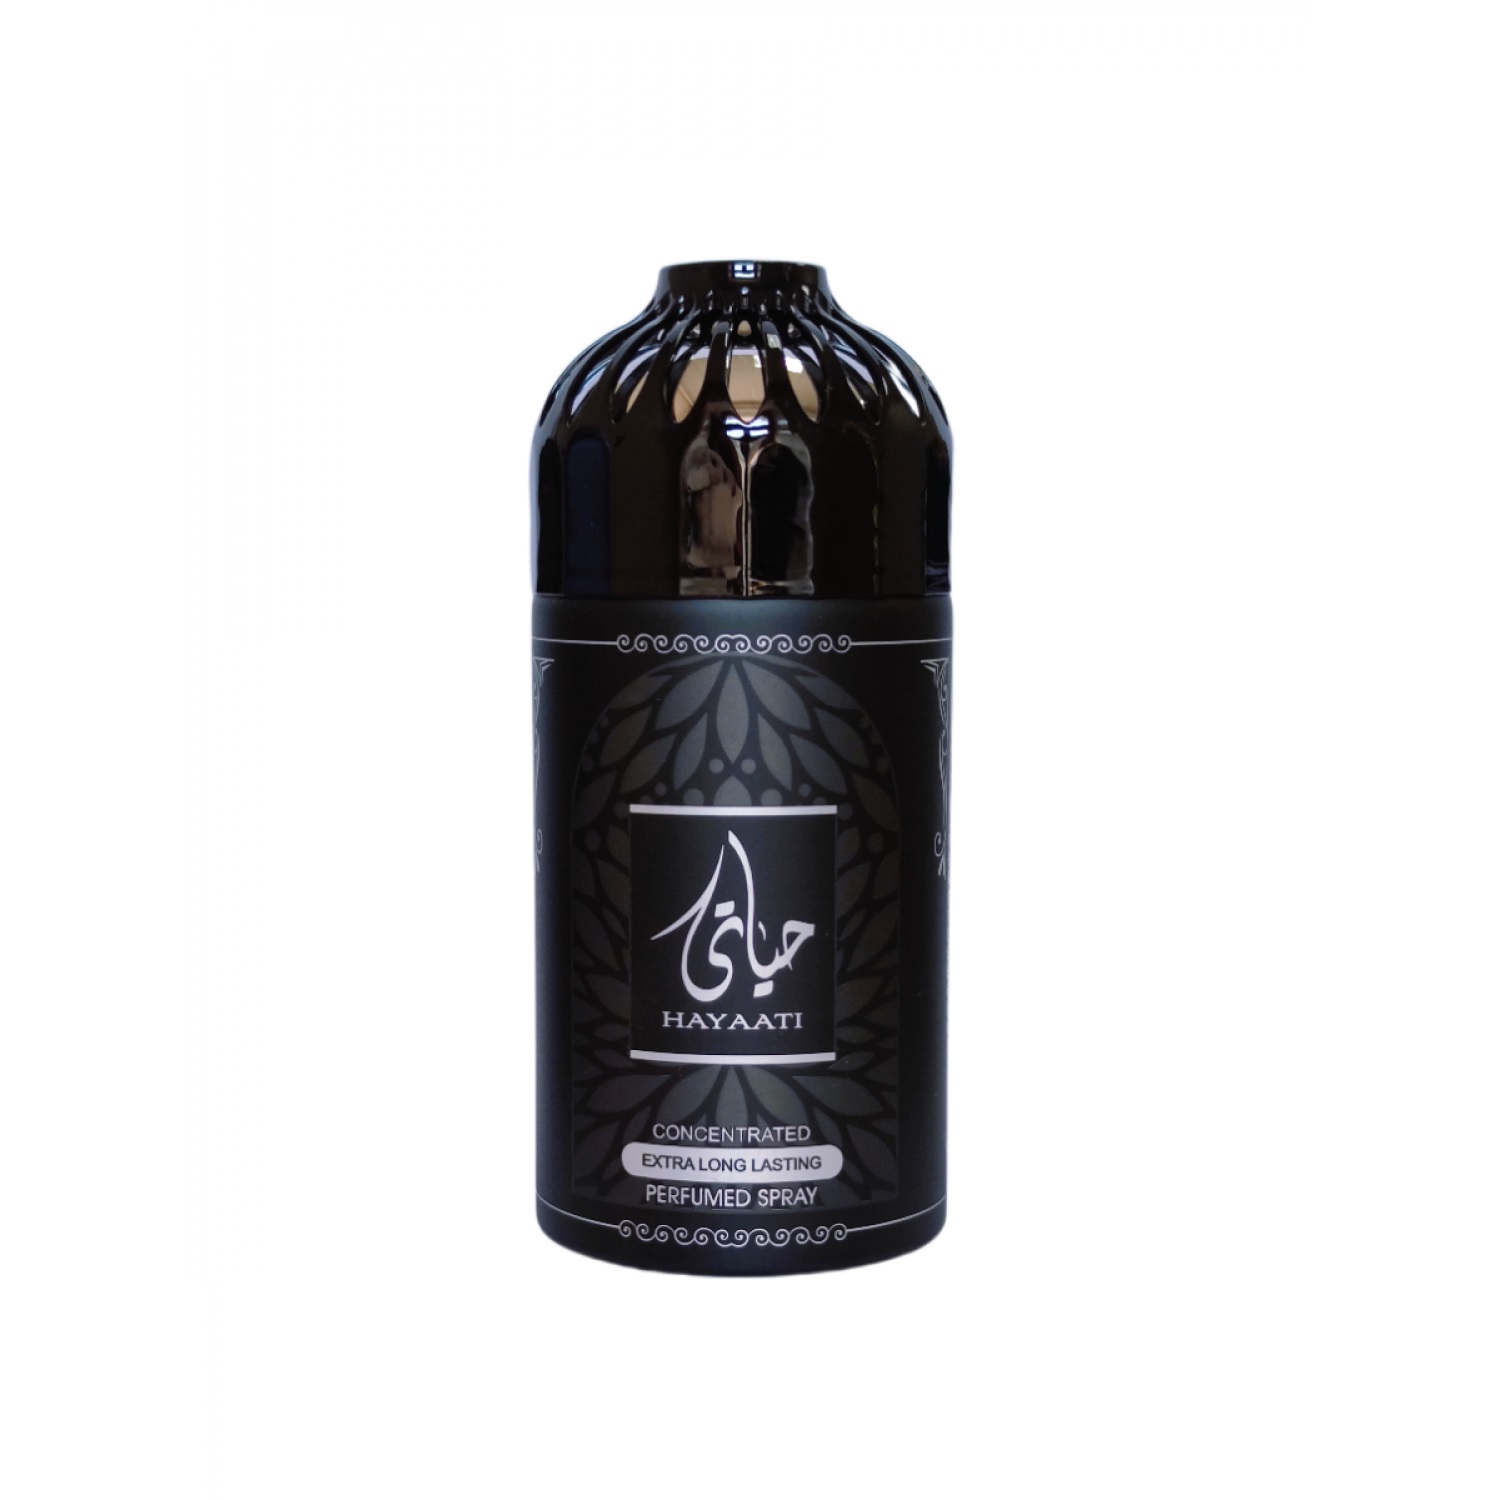 HAYAATI Concentrated Extra Long Lasting Perfumed Spray, Ard Al Zaafaran Trading (ХАЯАТИ концентрированный экстра стойкий дезодорант, Ард Аль Заафаран), 250 мл.